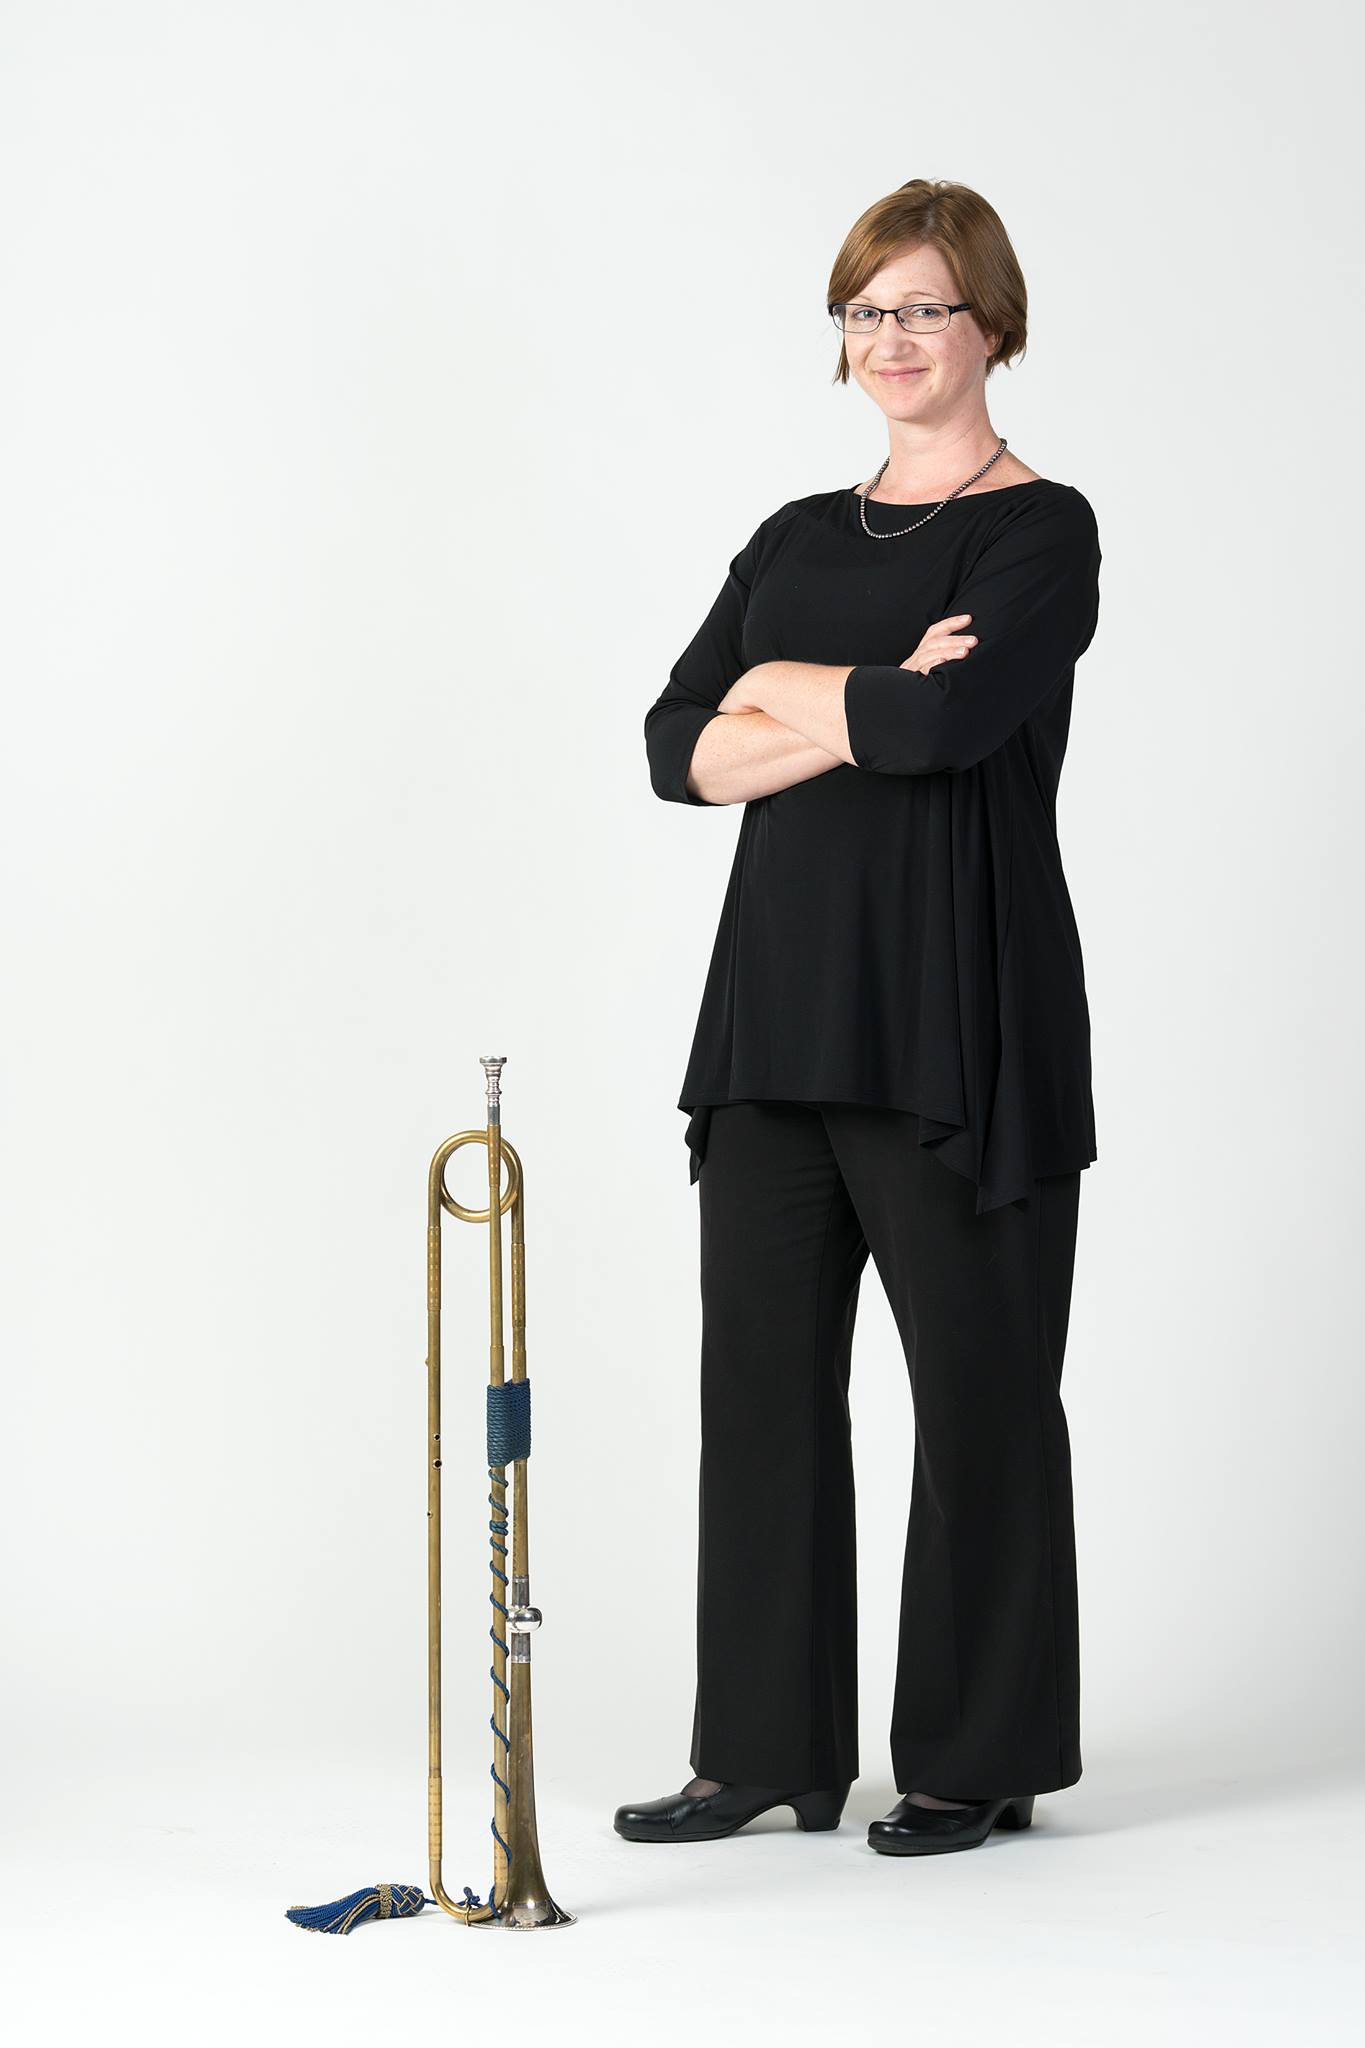 Kathryn Adduci with baroque trumpet - photo Gary Payne